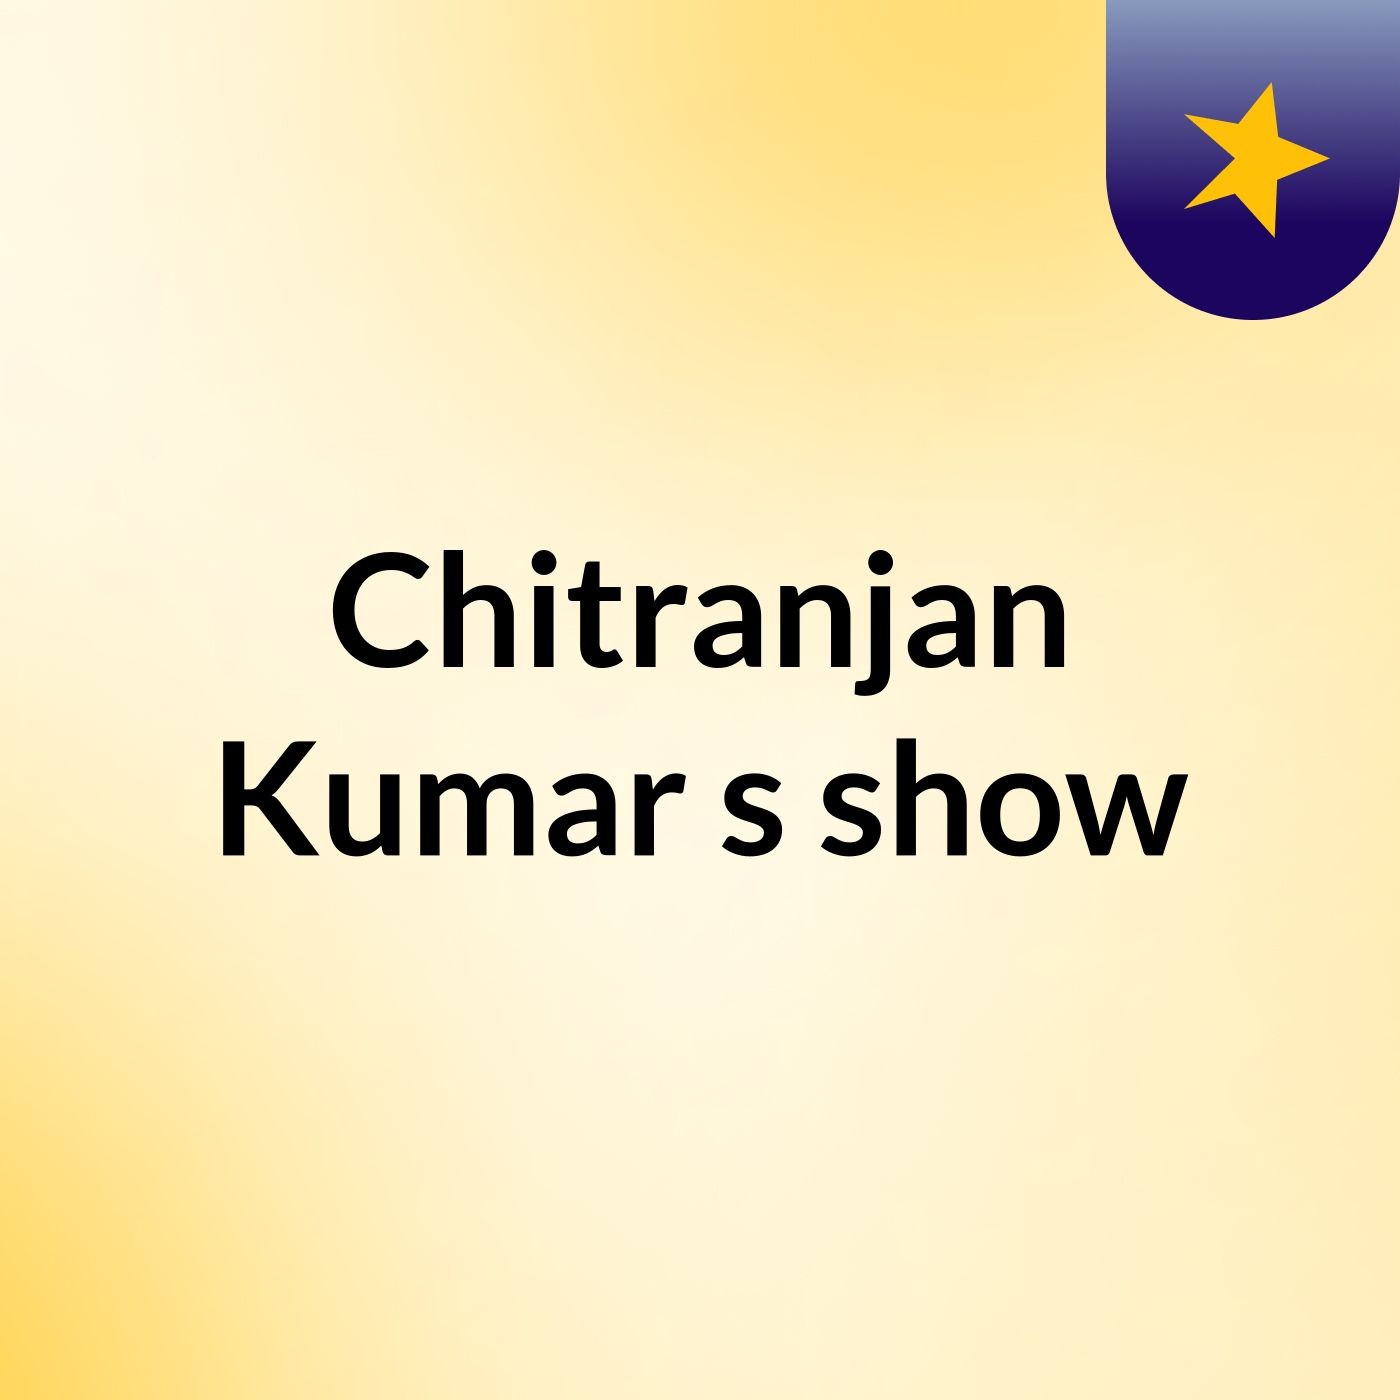 Chitranjan Kumar's show